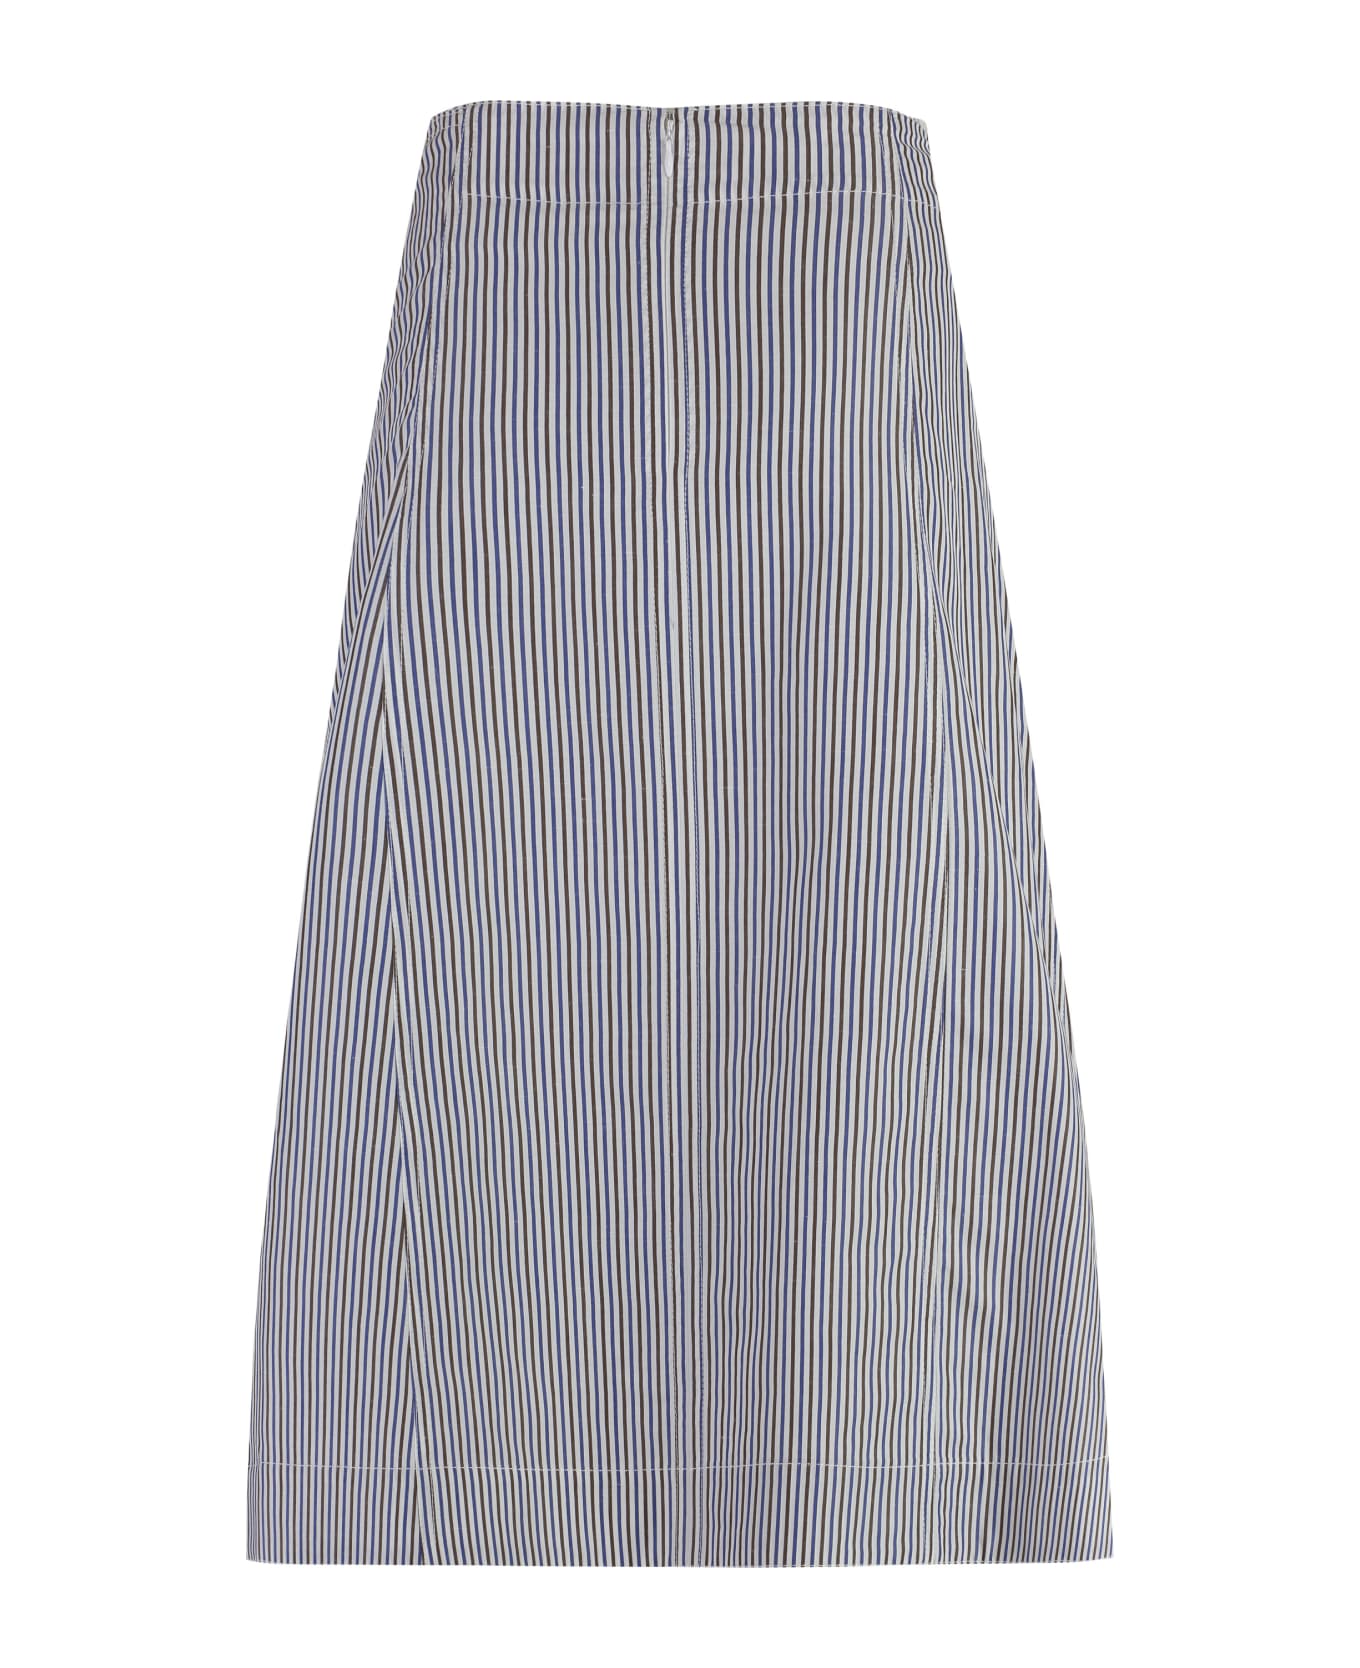 Bottega Veneta Cotton And Linen Skirt - Multicolor スカート